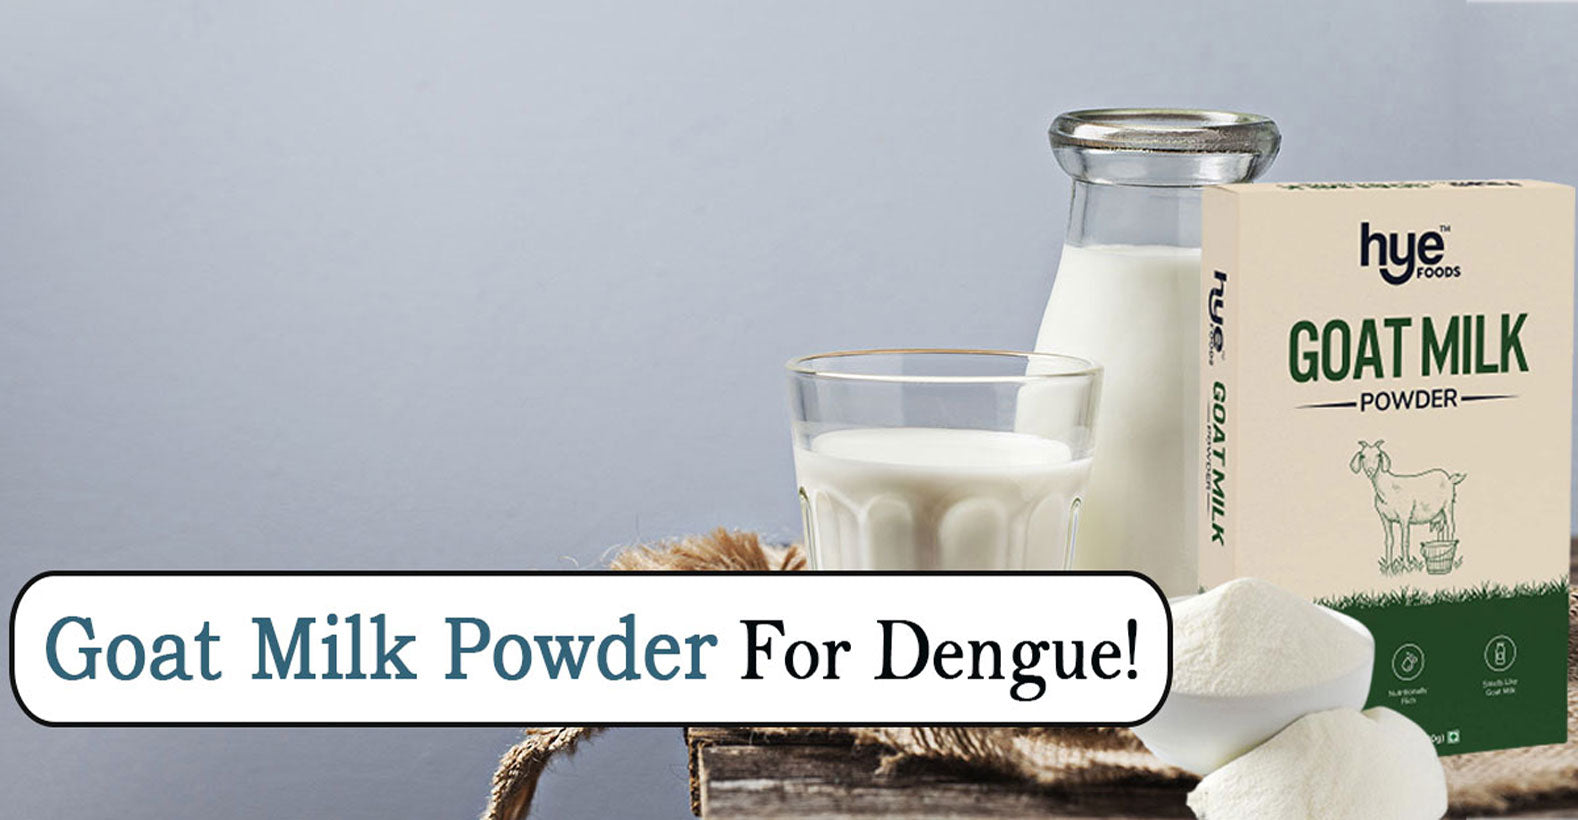 Hye Food Goat Milk Powder For Dengue